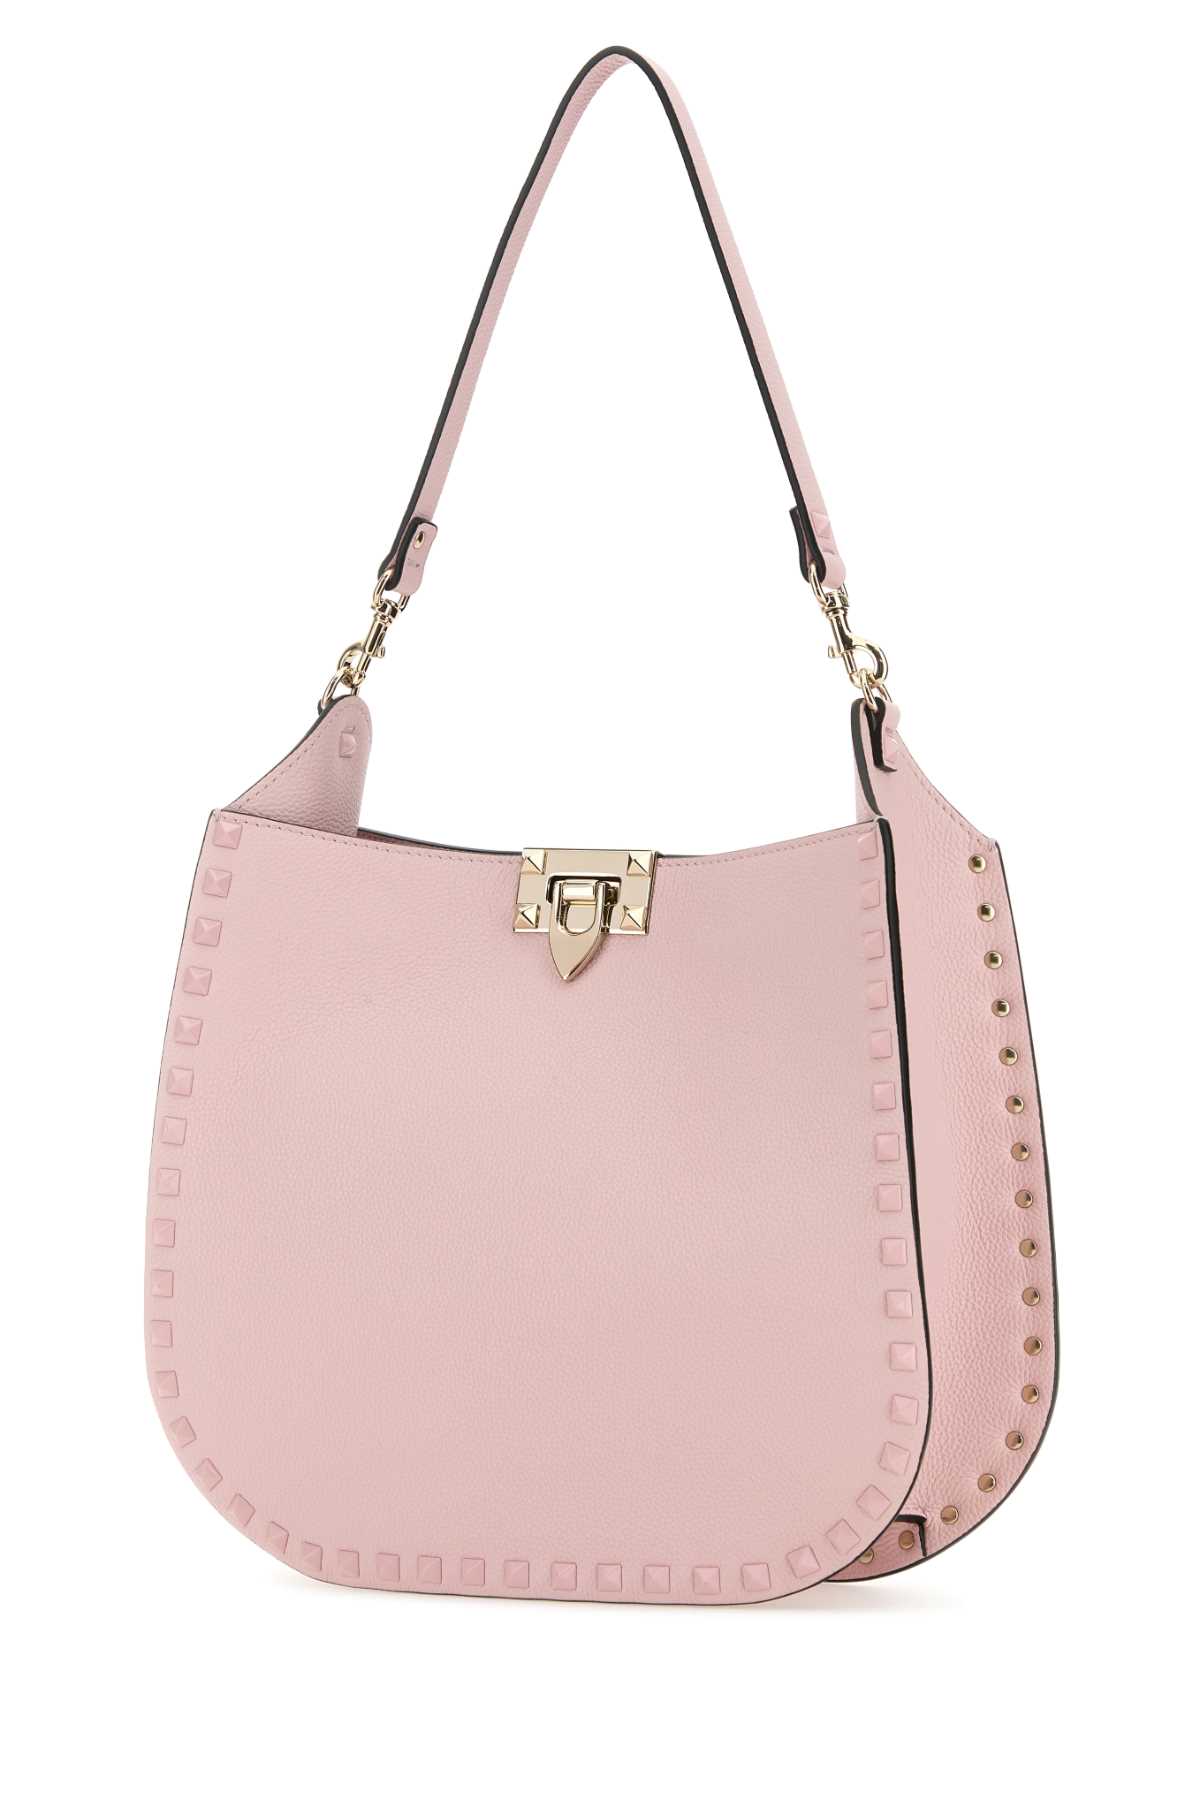 Valentino Garavani Pink Leather Hobo Rockstud Handbag In Rosequartz